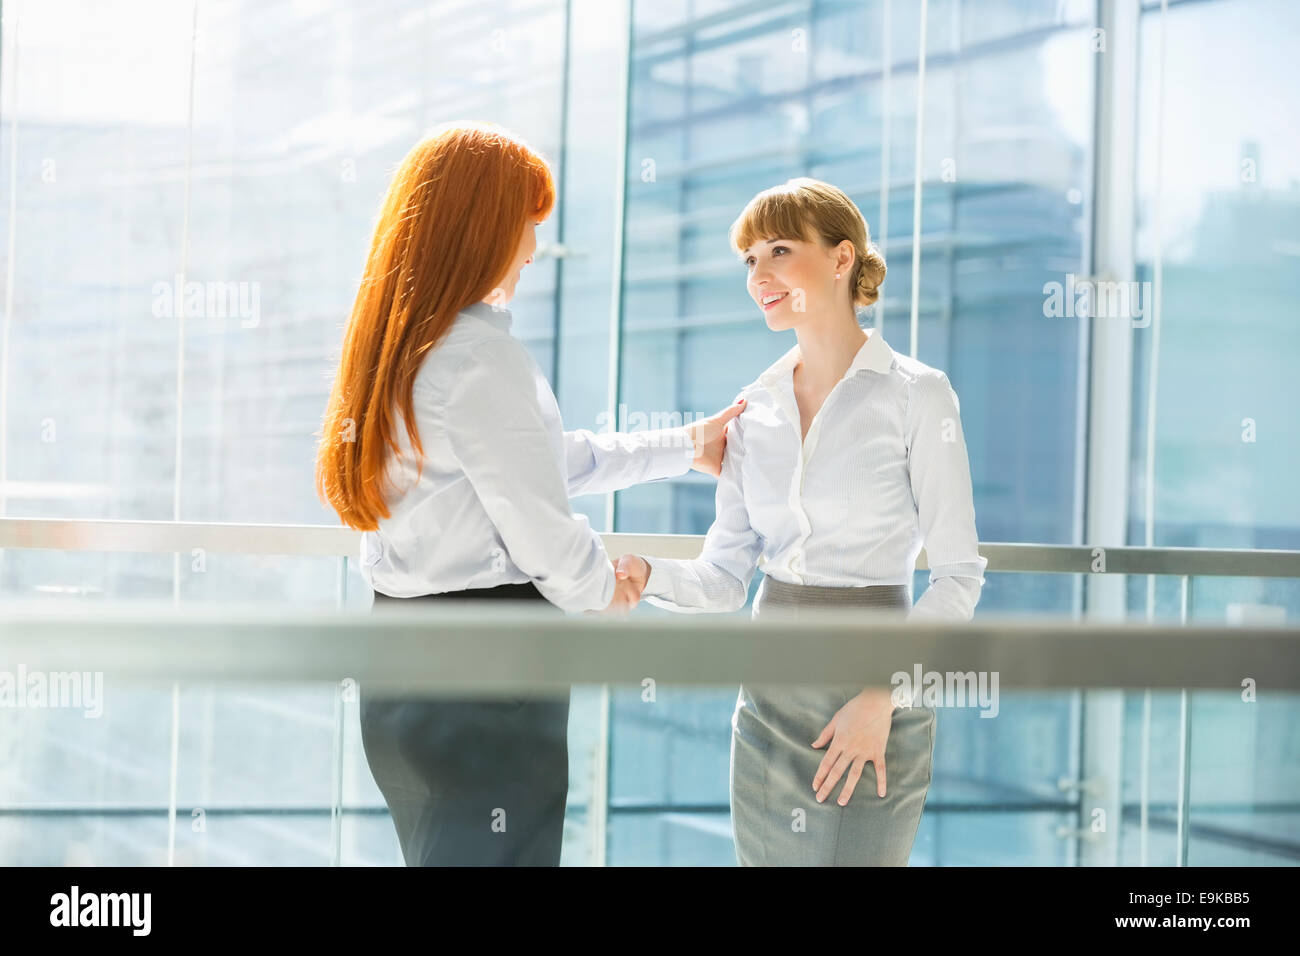 Businesswomen shaking hands in office Stock Photo